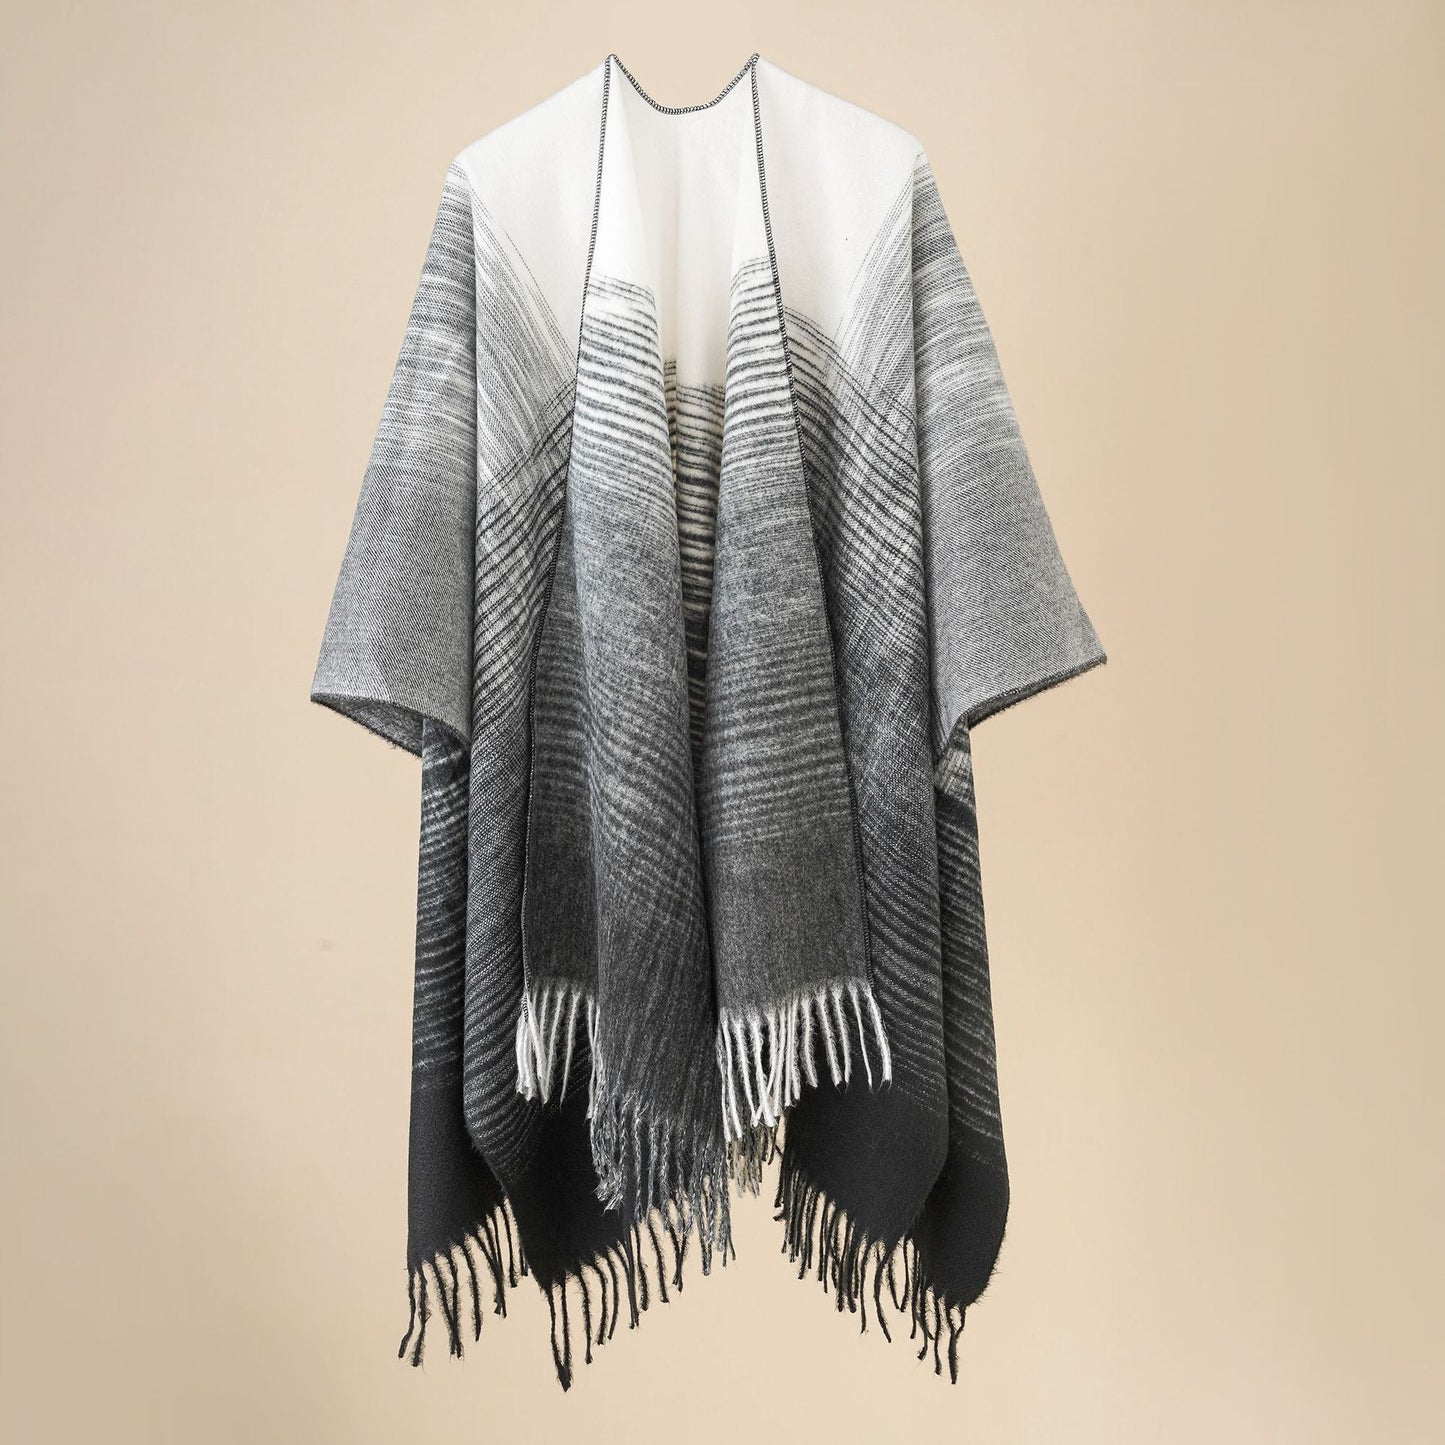 Fashion Tassels Shawls for Women-shawls-White-155CM-Free Shipping at meselling99